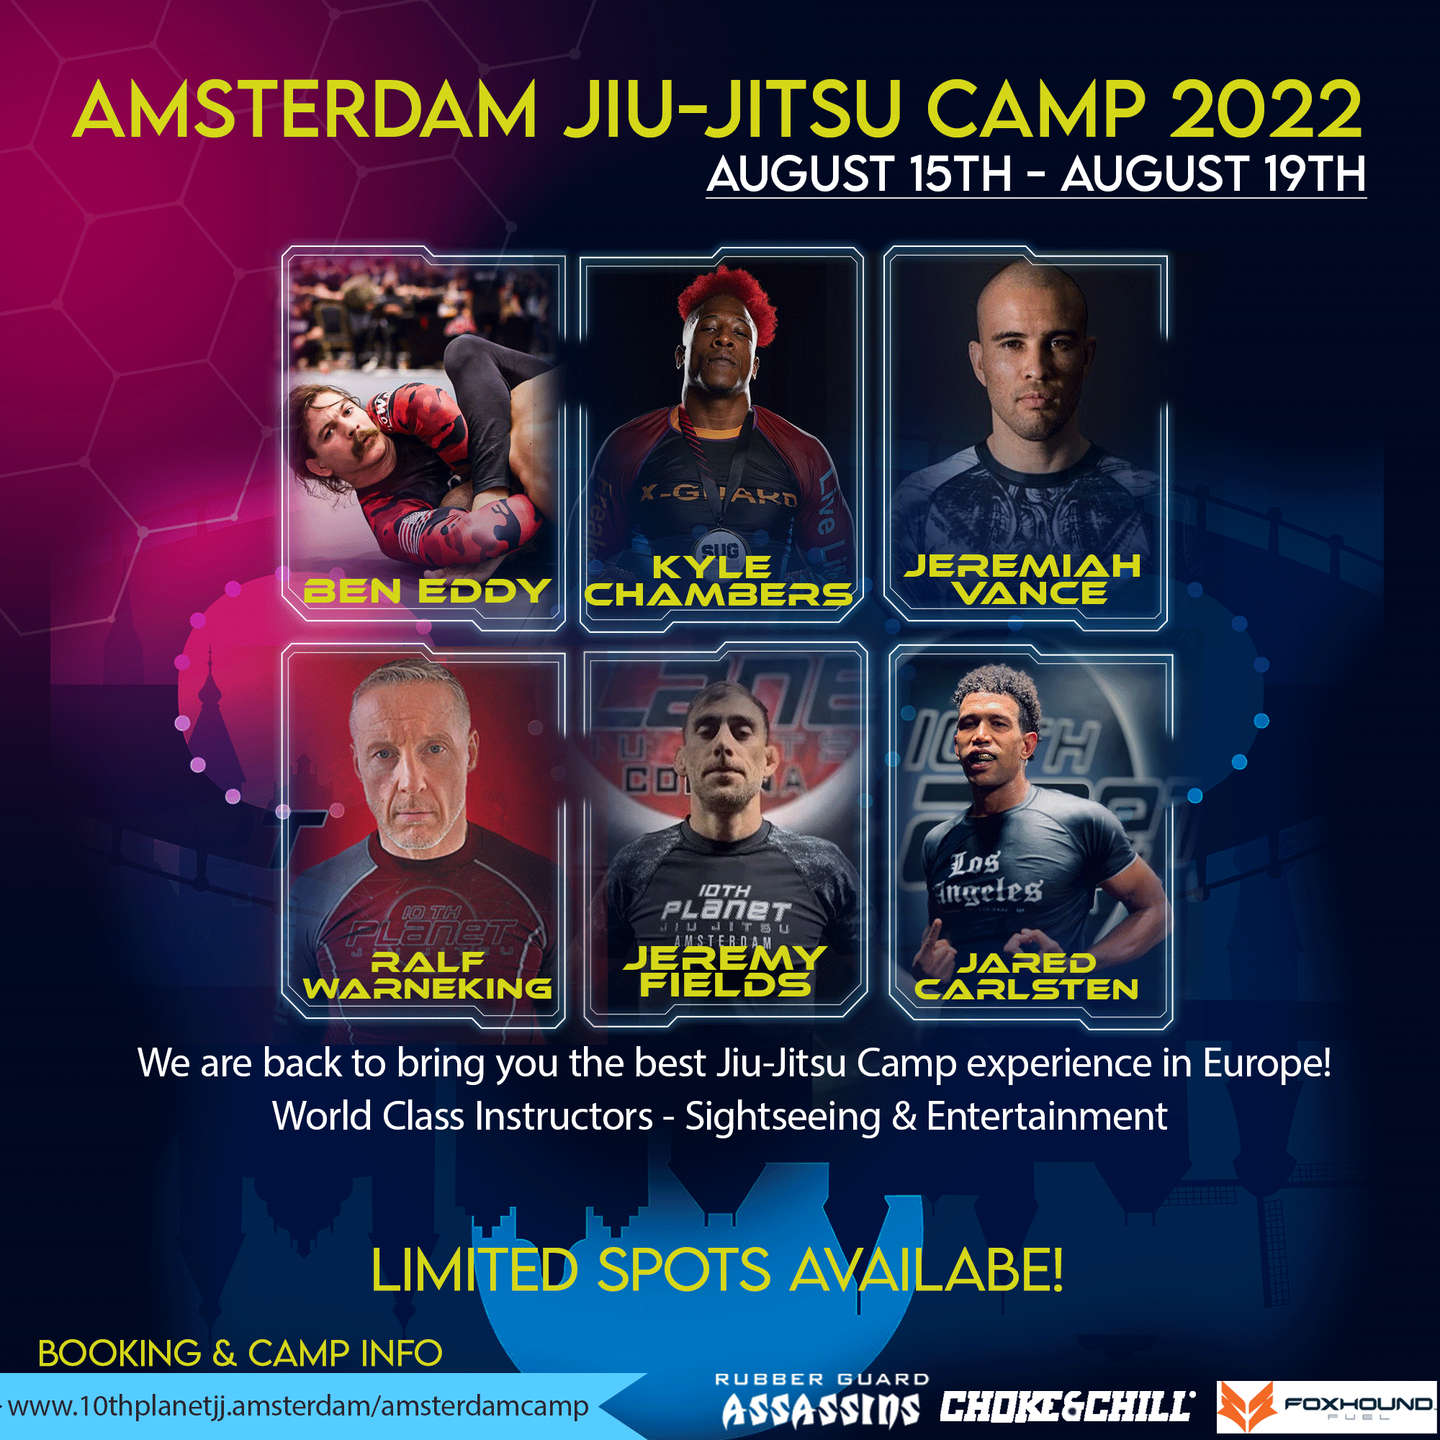 Additional lineup for the Amsterdam Jiu Jitsu Camp 2022